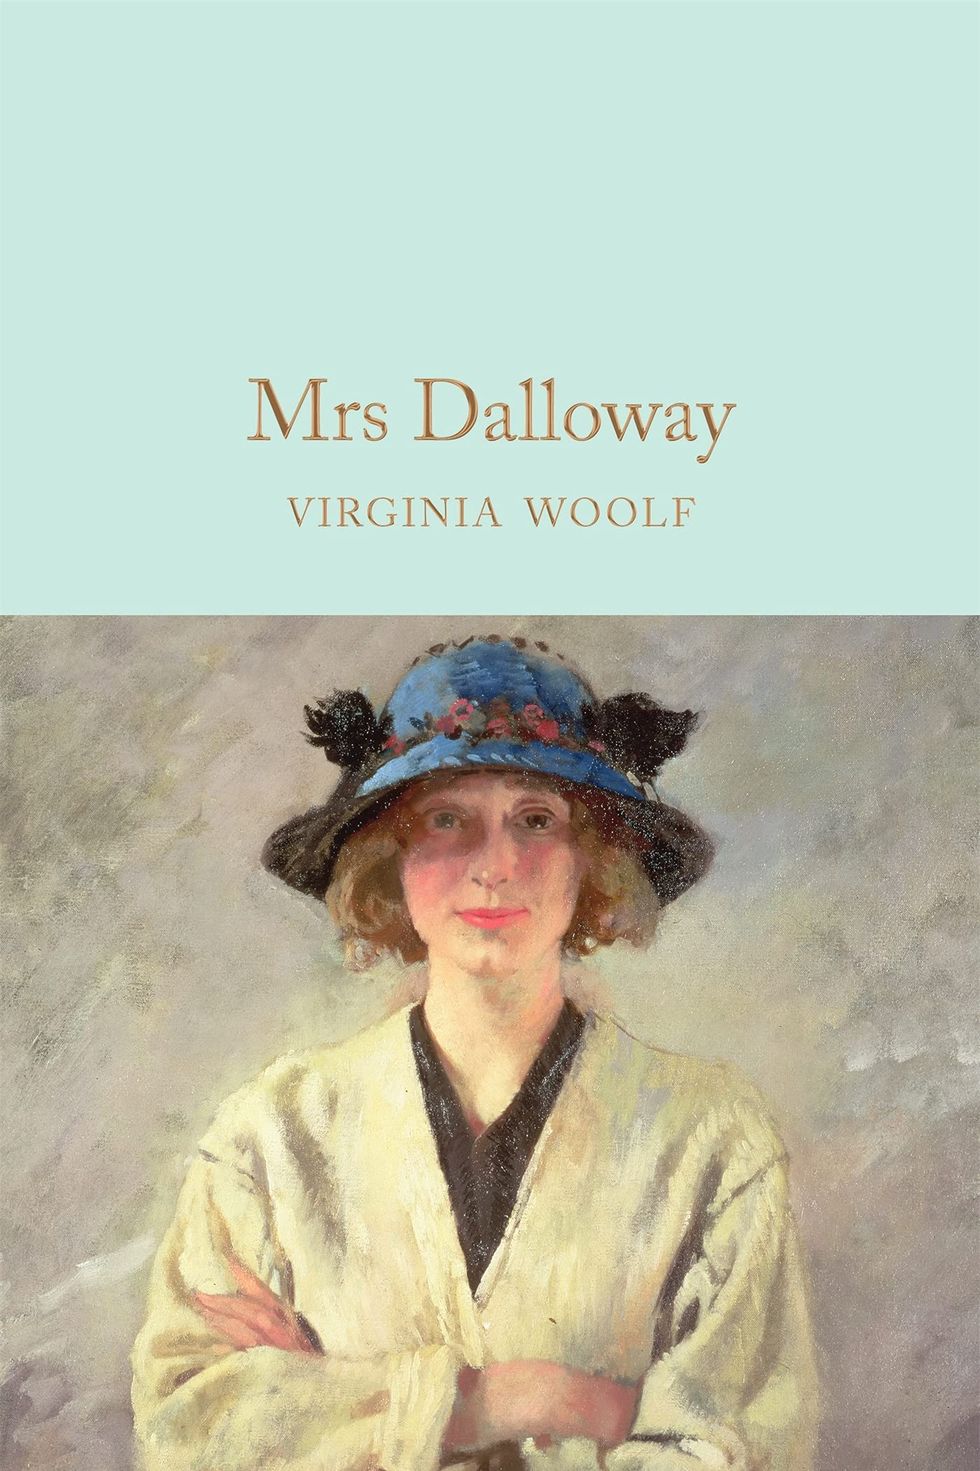 Virginia Woolf, 'Mrs Dalloway'